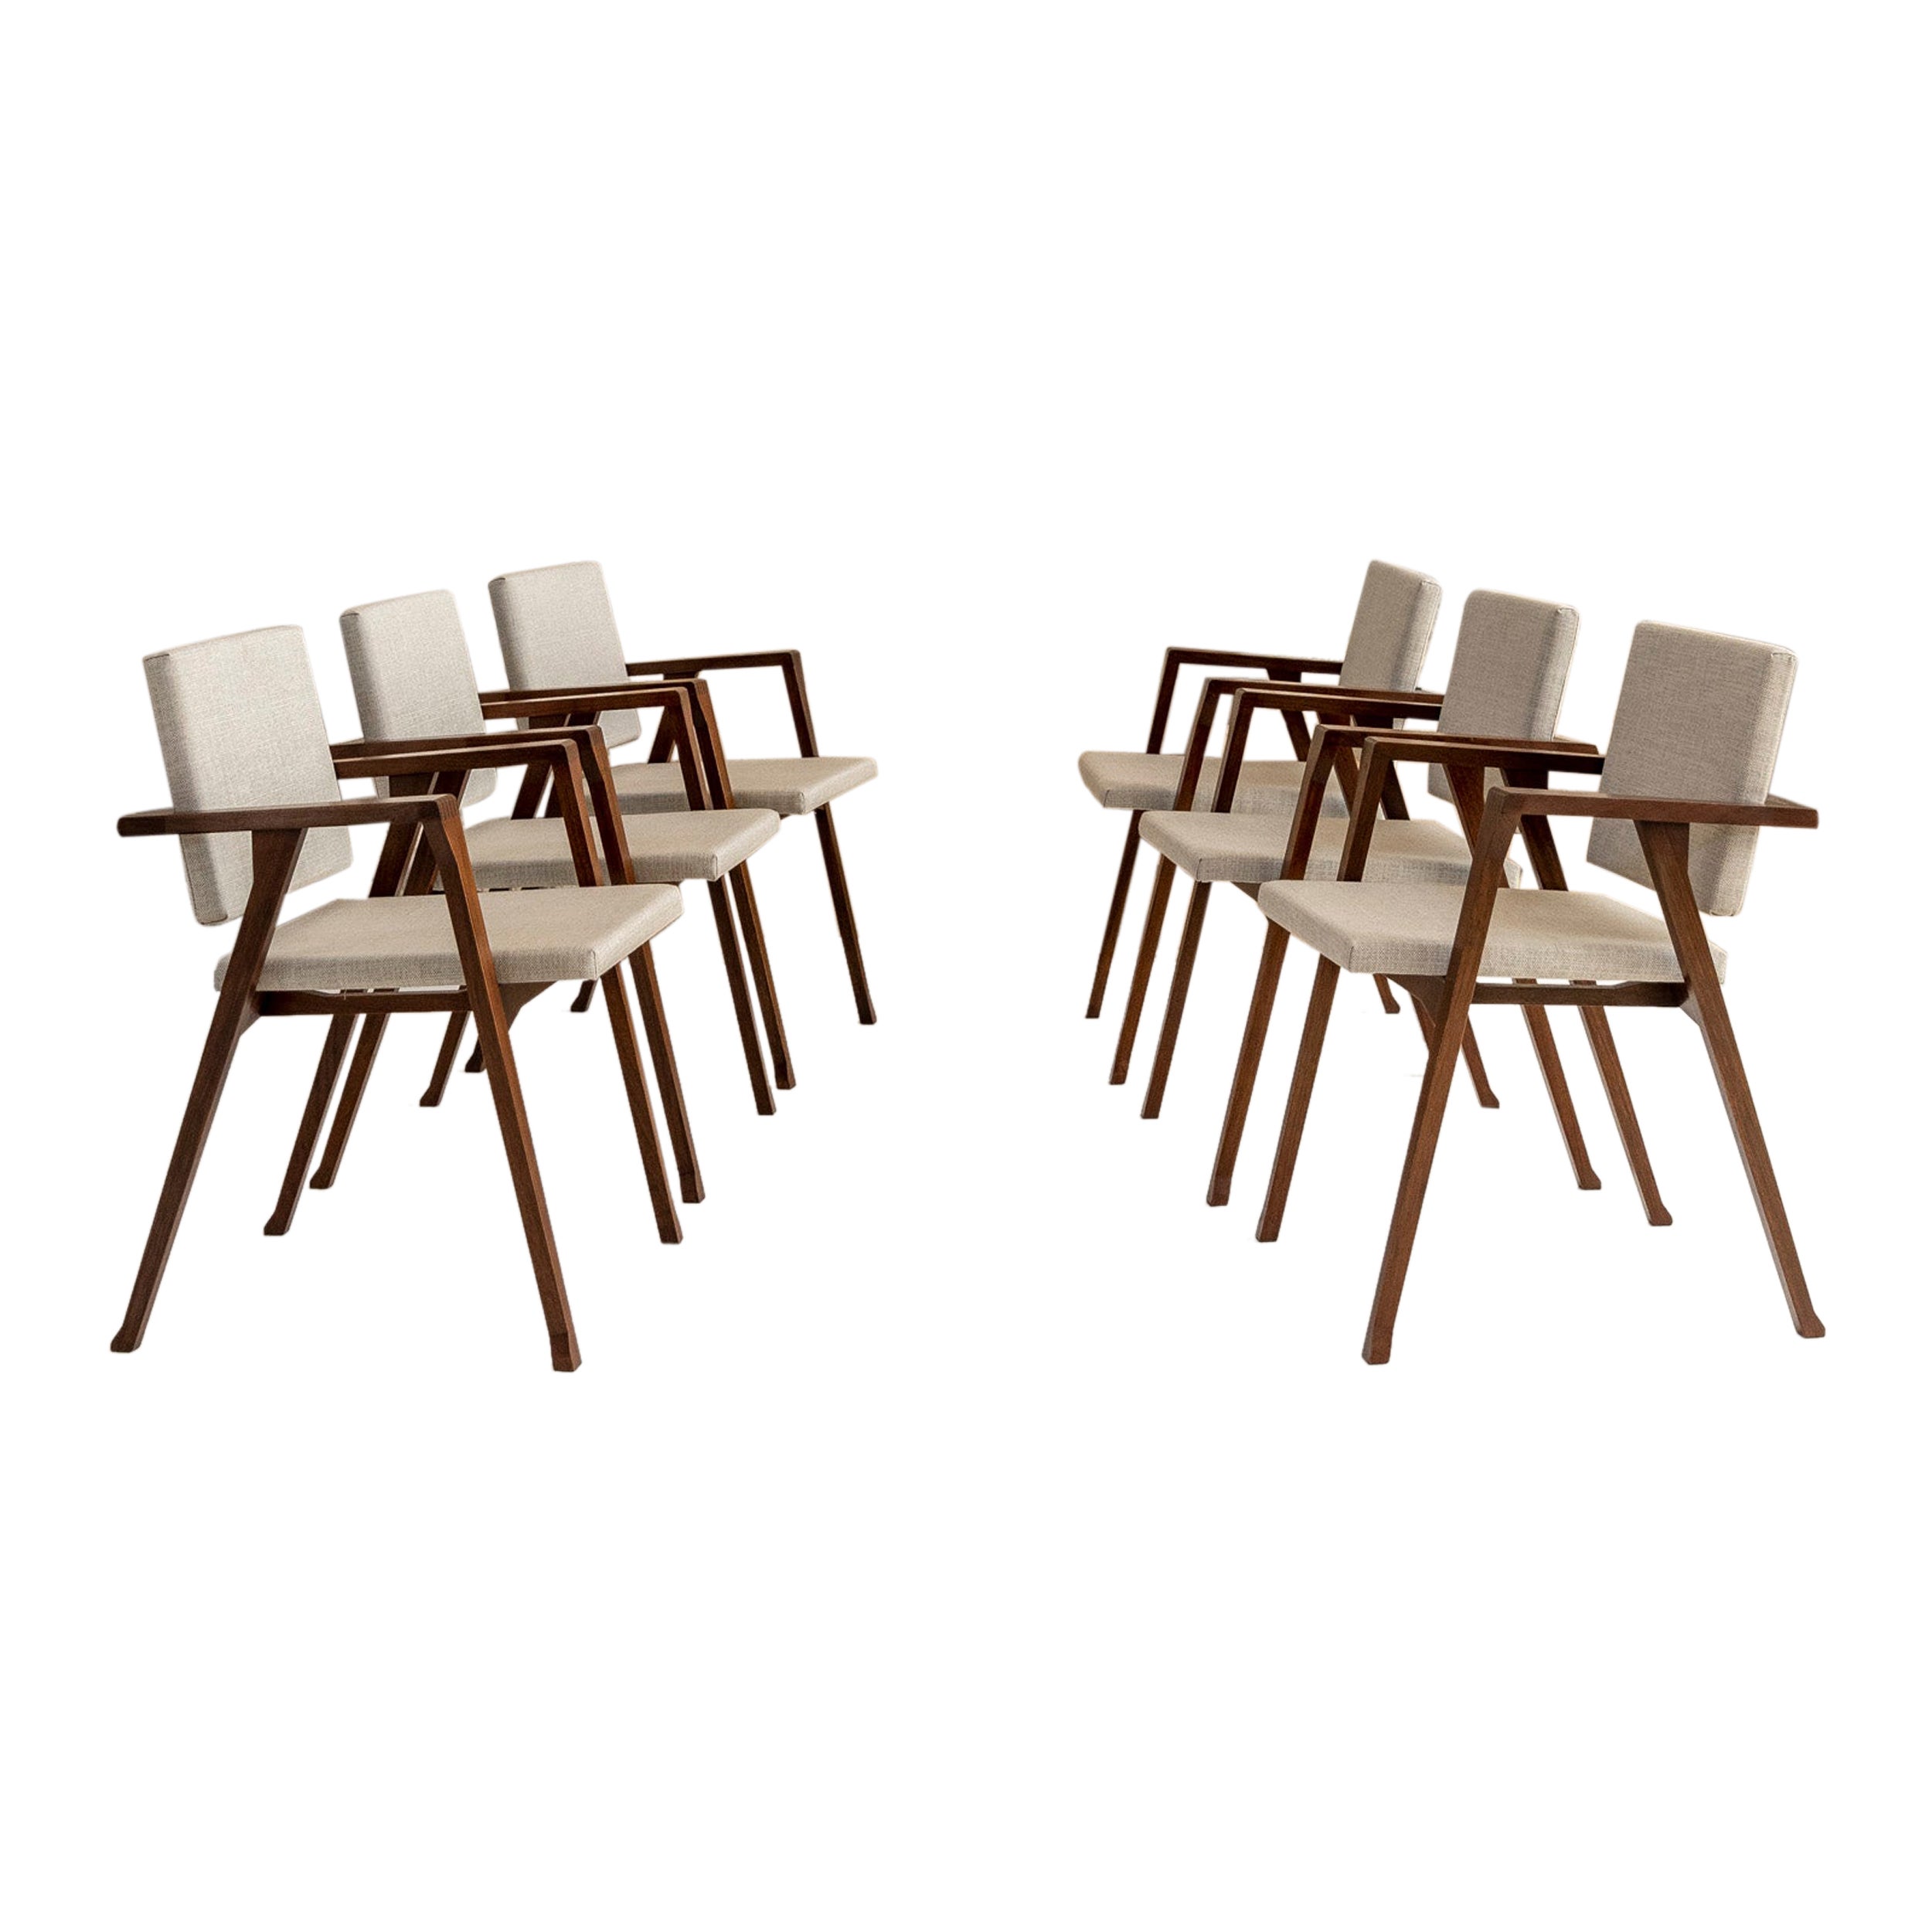 Set of 6 Italian Midcentury Chairs "Luisa" by Franco Albini